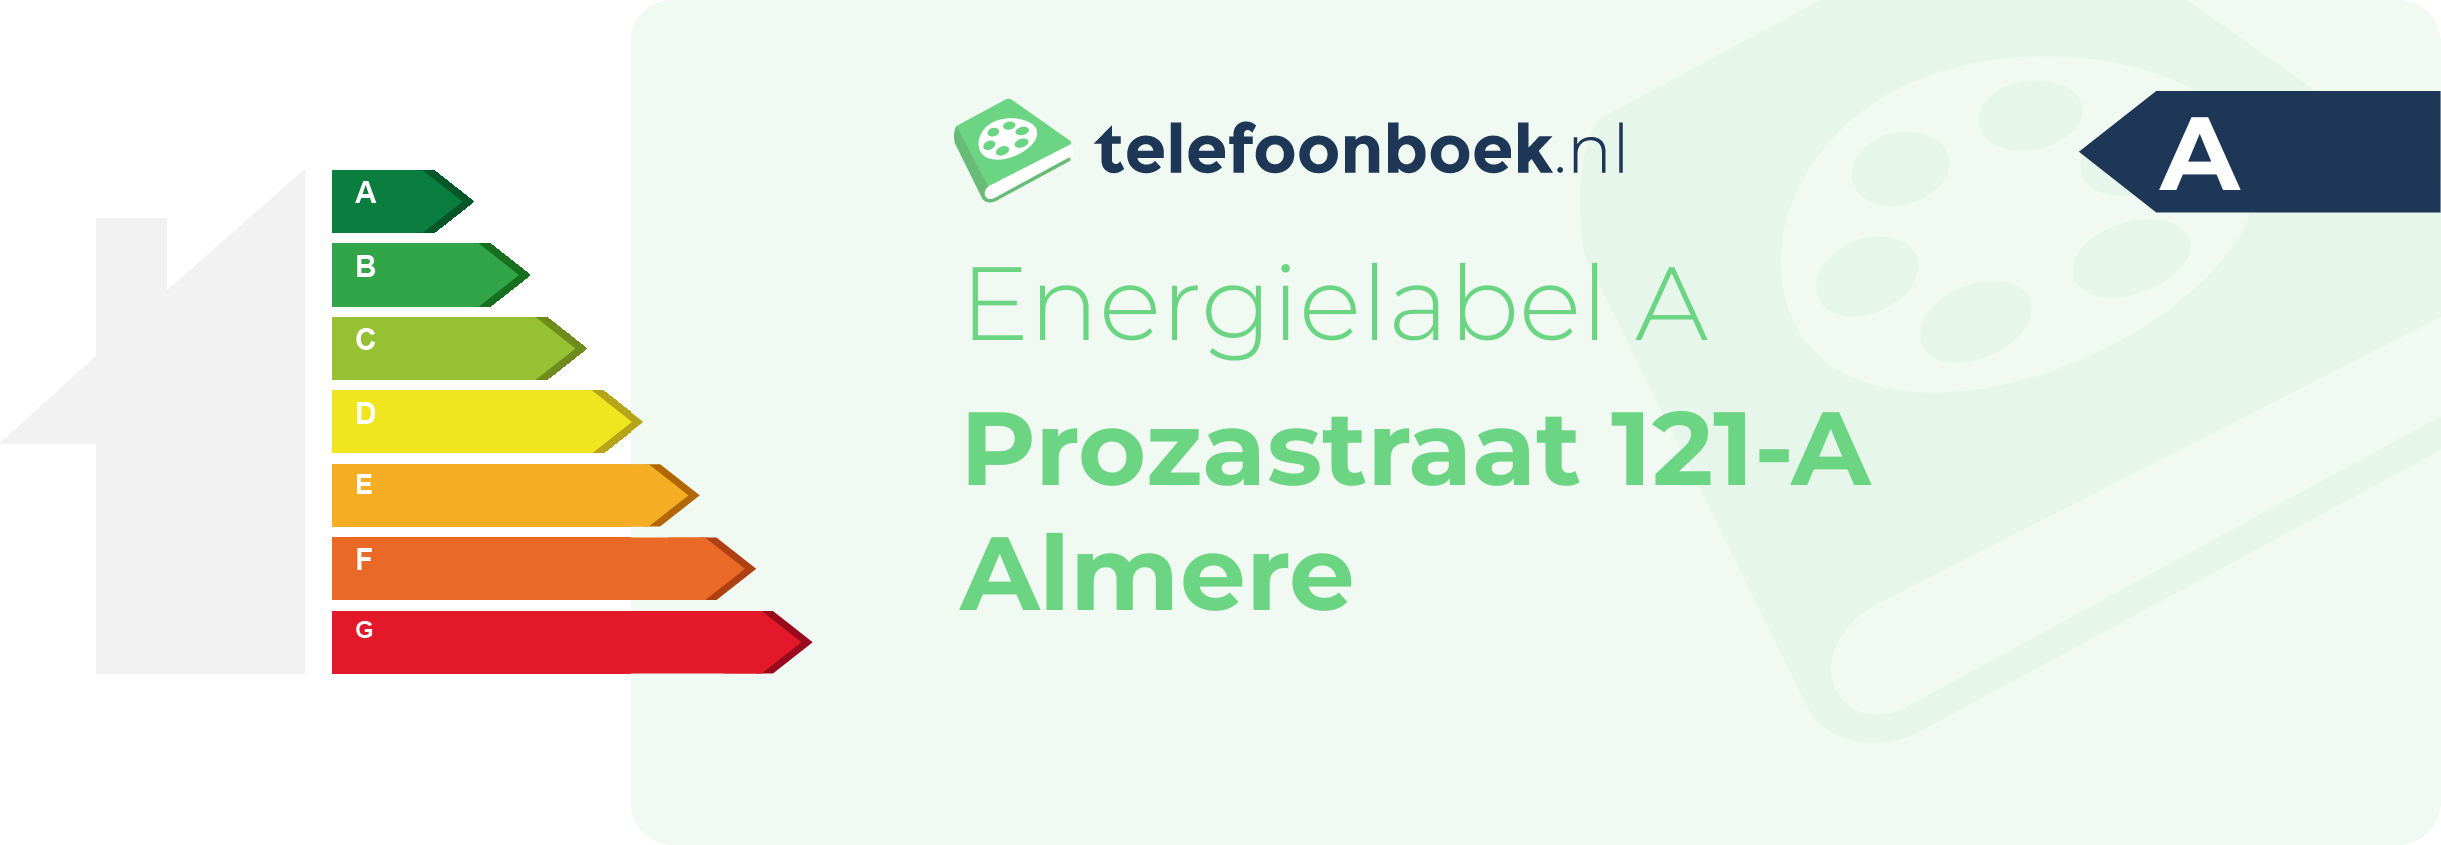 Energielabel Prozastraat 121-A Almere